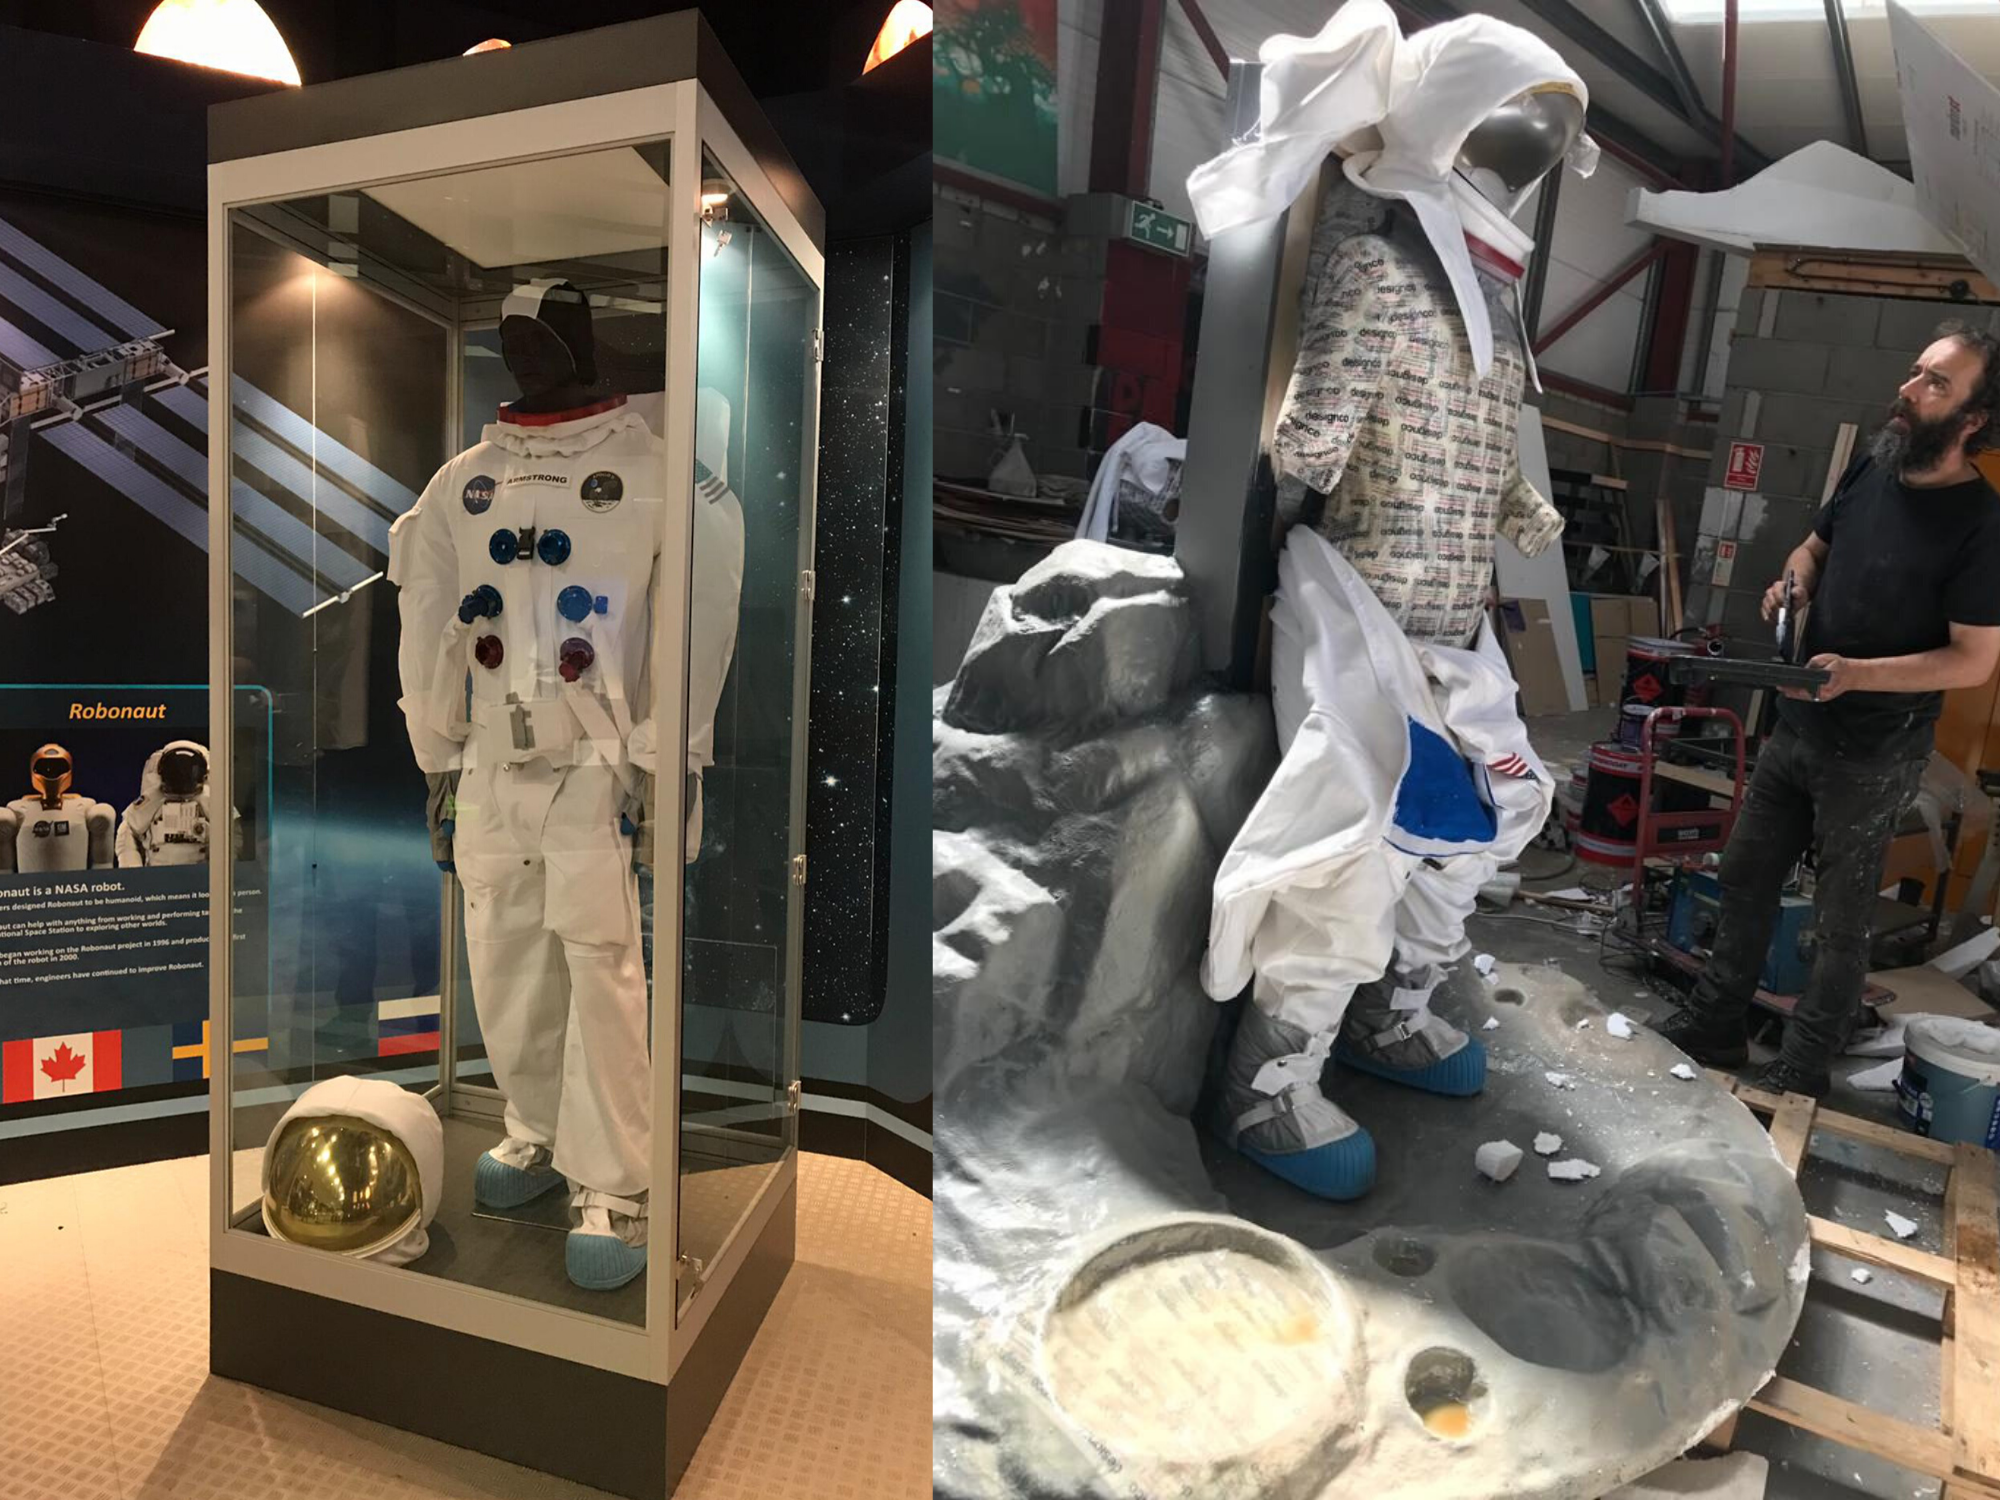 Final astronaut in display case